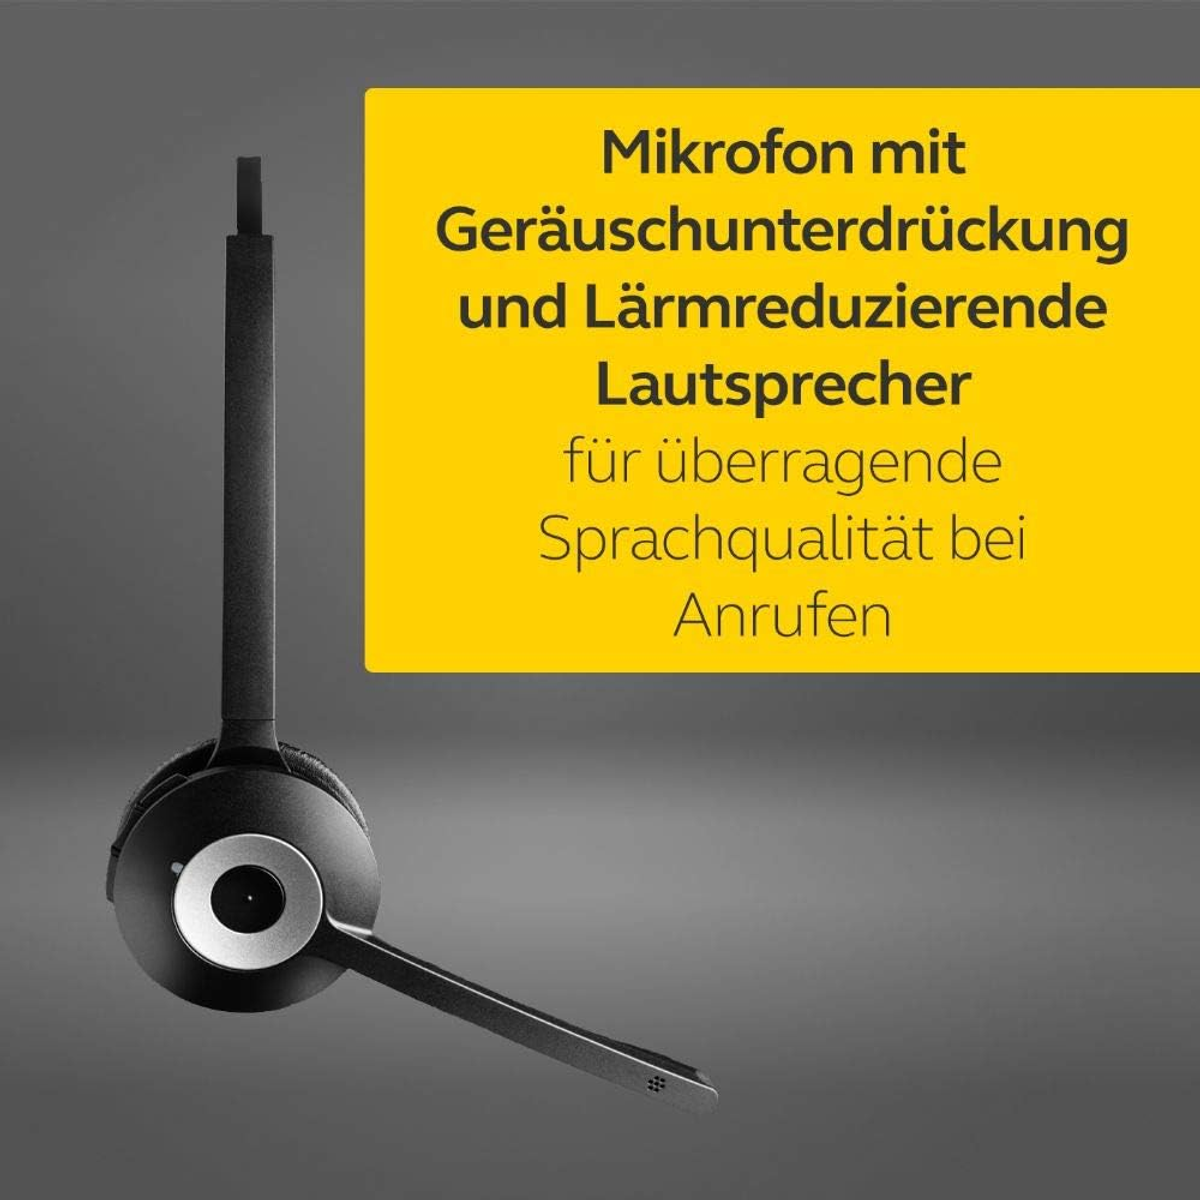 JABRA Kopfhörer Bluetooth On-ear Pro Schwarz 935,